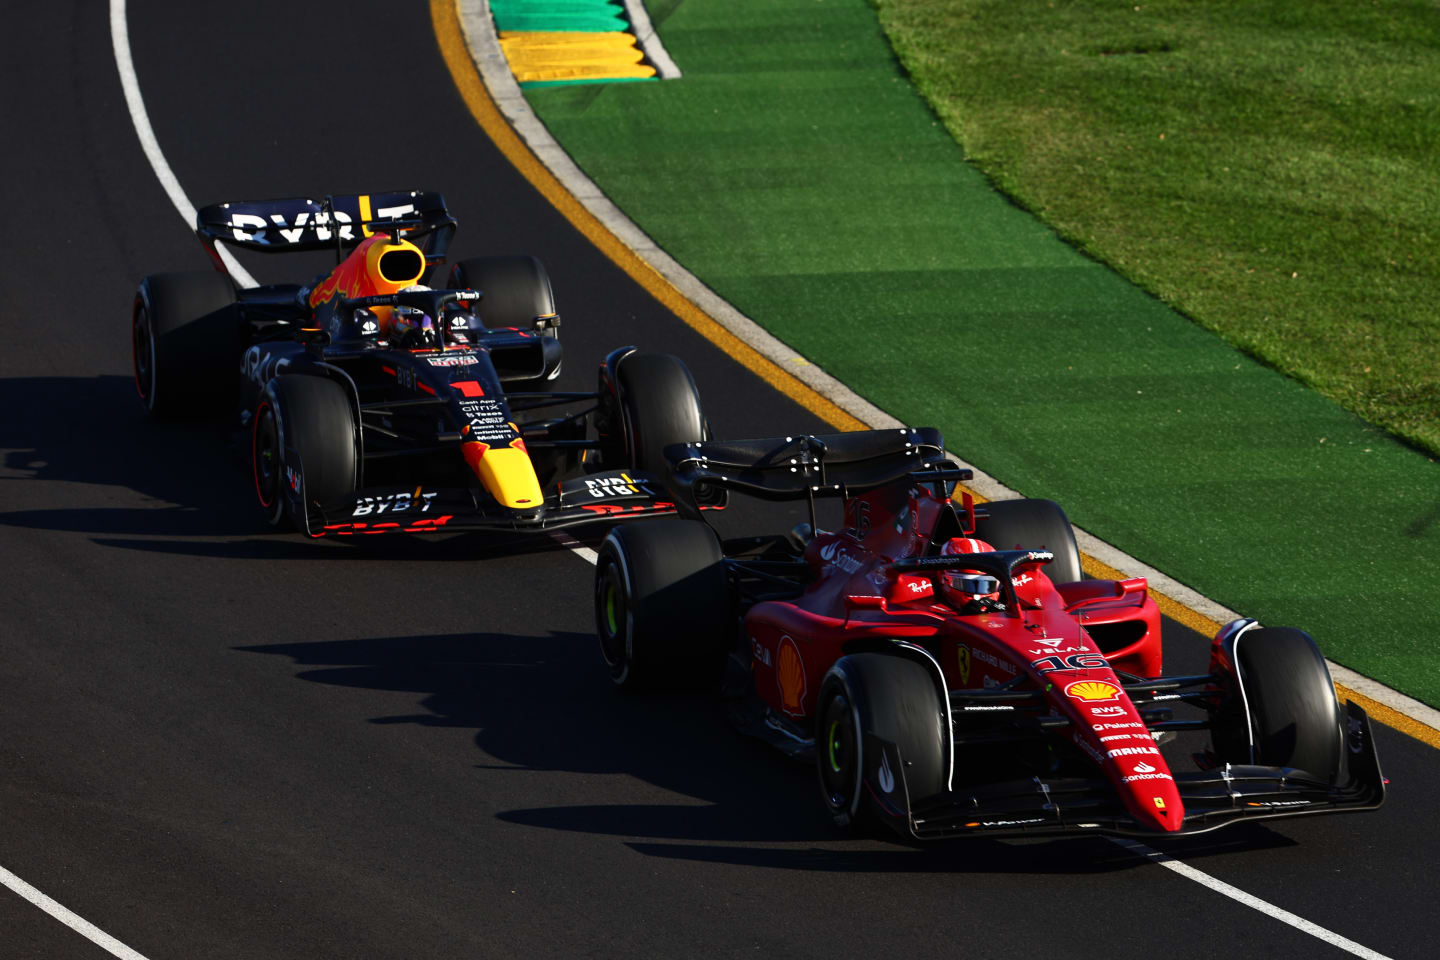 MELBOURNE, AUSTRALIA - APRIL 10: Charles Leclerc of Monaco driving (16) the Ferrari F1-75 leads Max